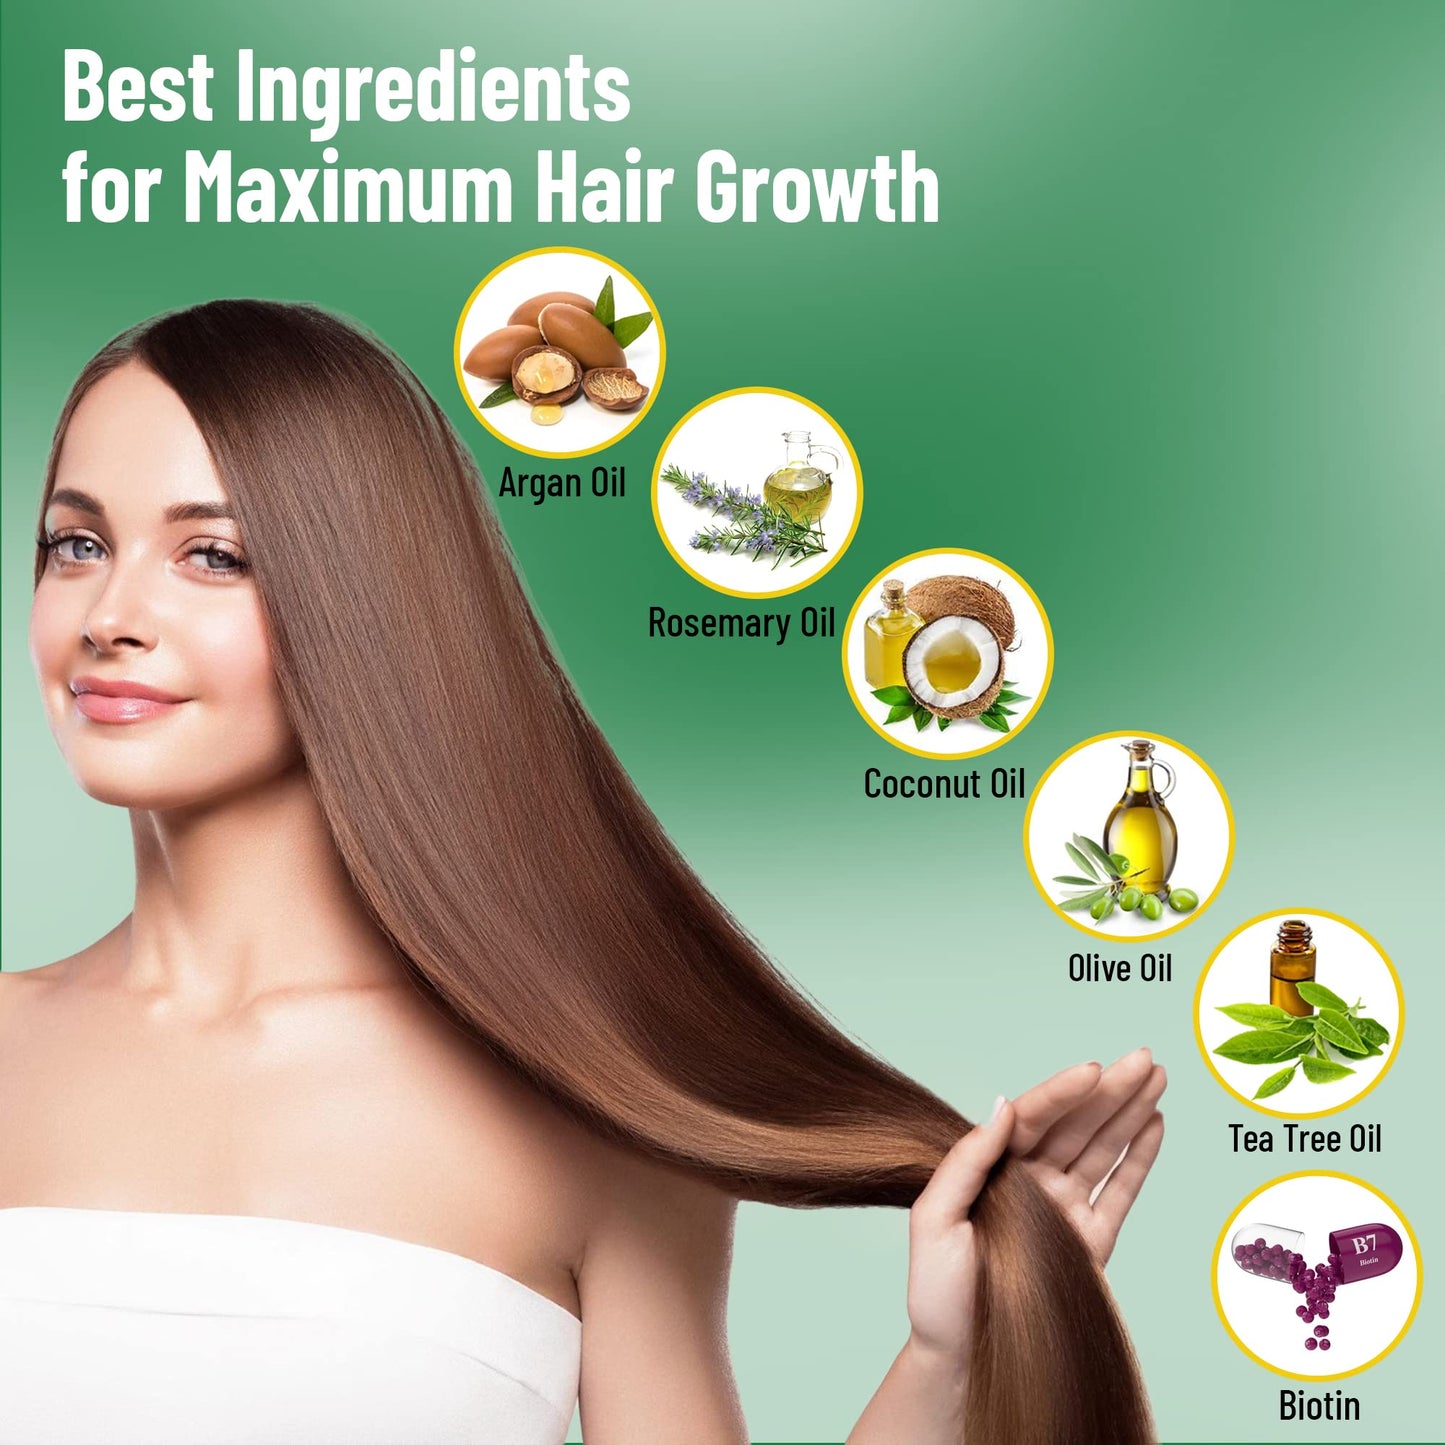 Biotin Hair Growth and Anti Hair Loss DHT Blocker Shampoo for Men and Women